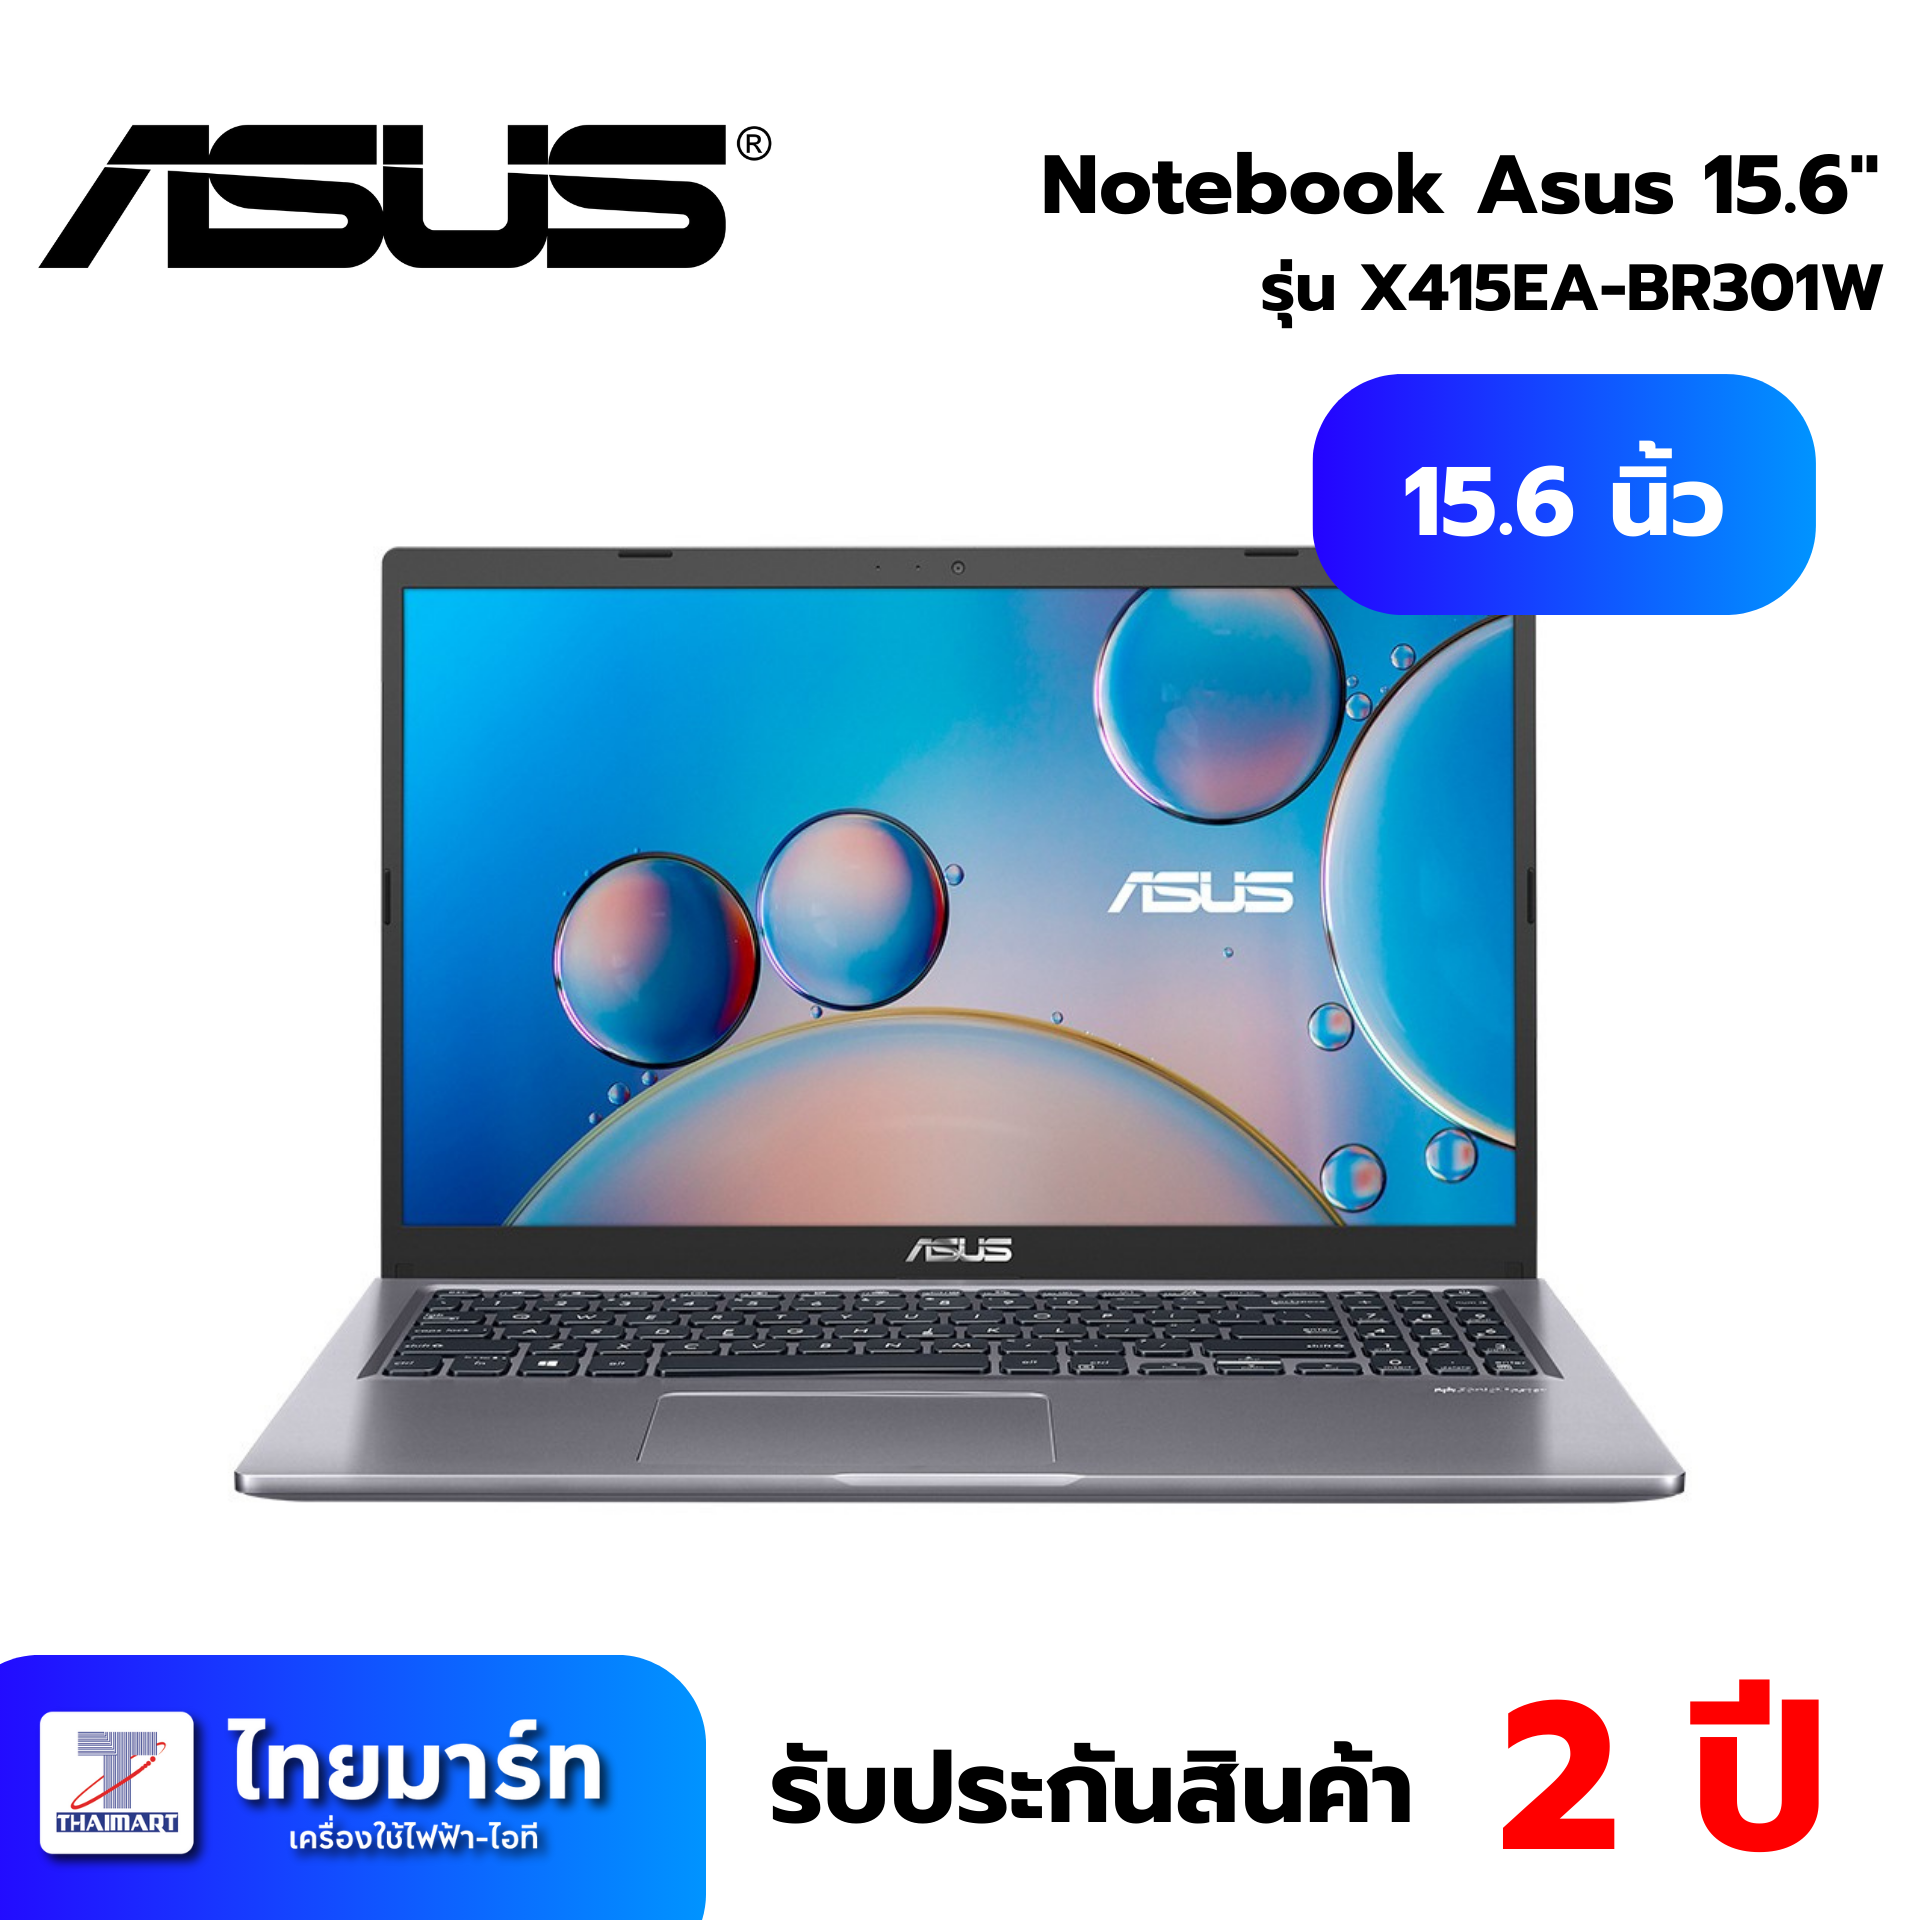 Notebook Asus 15.6" X415EA-BR301W